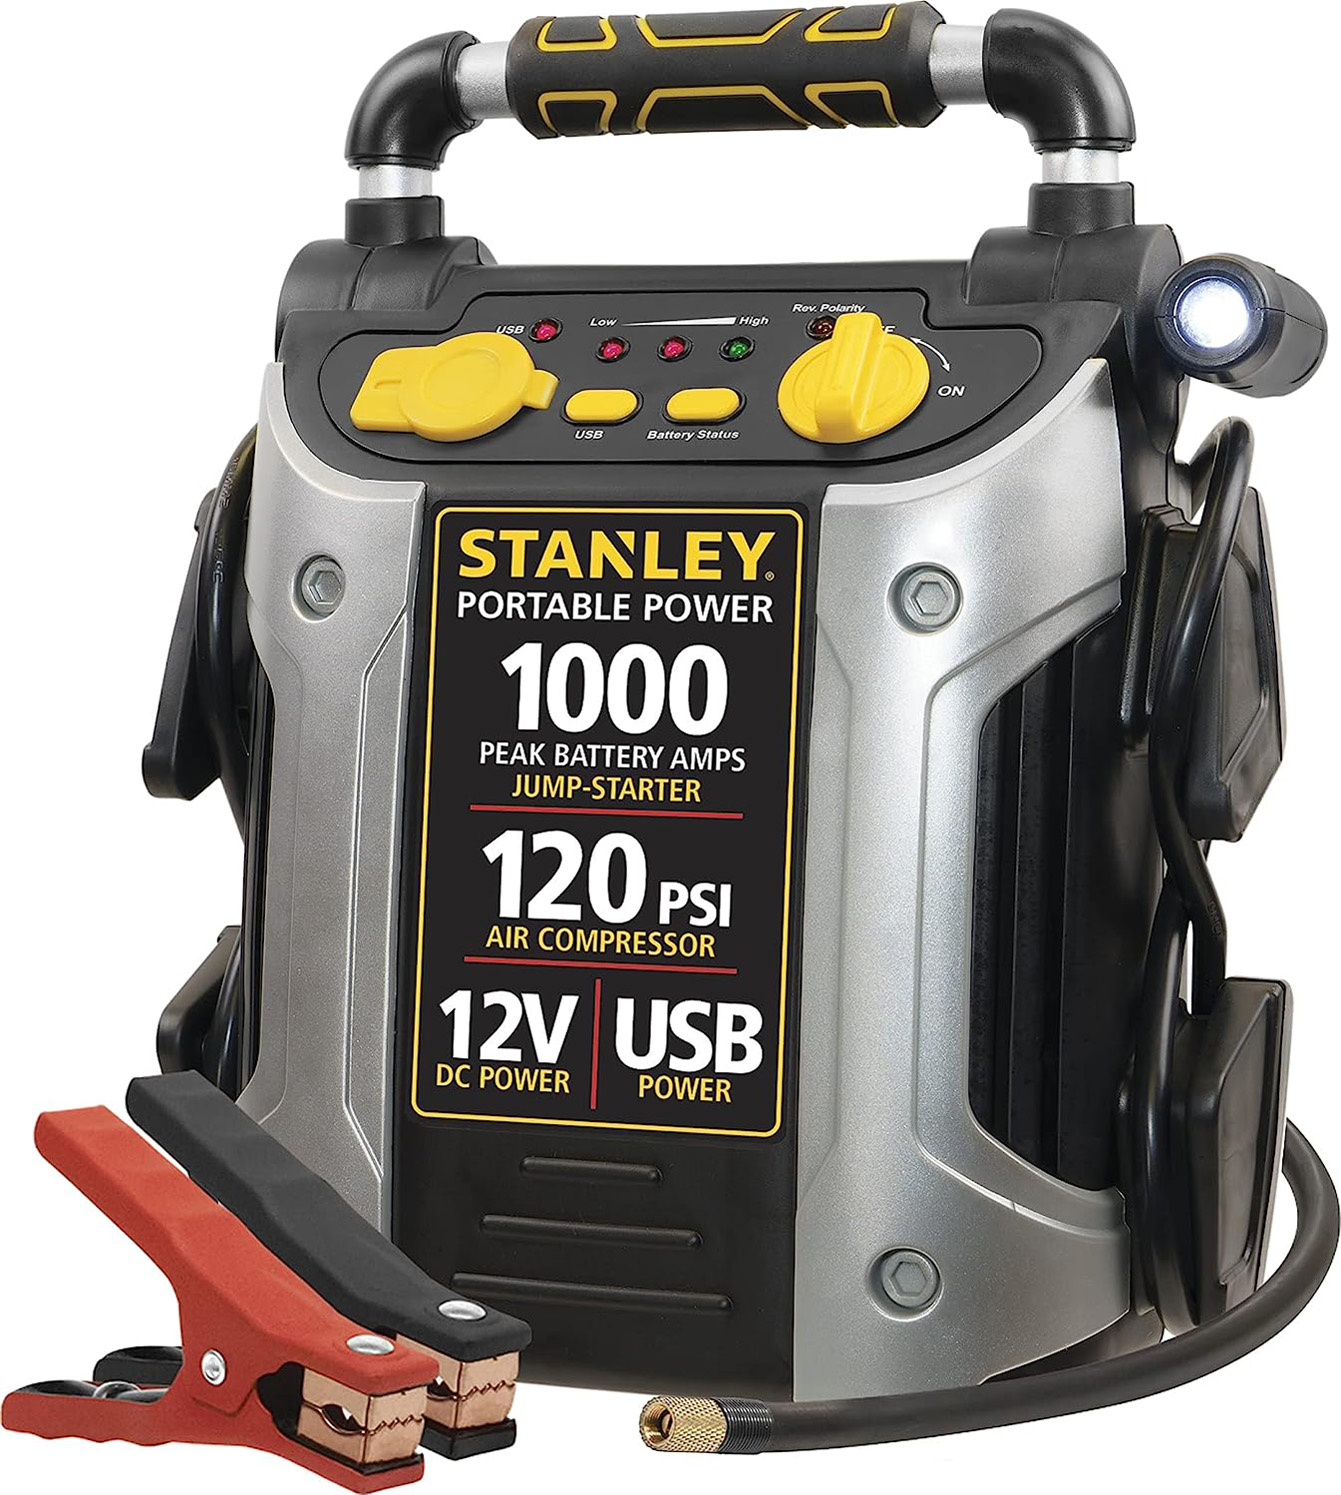 STANLEY J5C09 Portable Power Station Jump Starter 1000 Peak Amp Battery Booster, 120 PSI Air Compressor